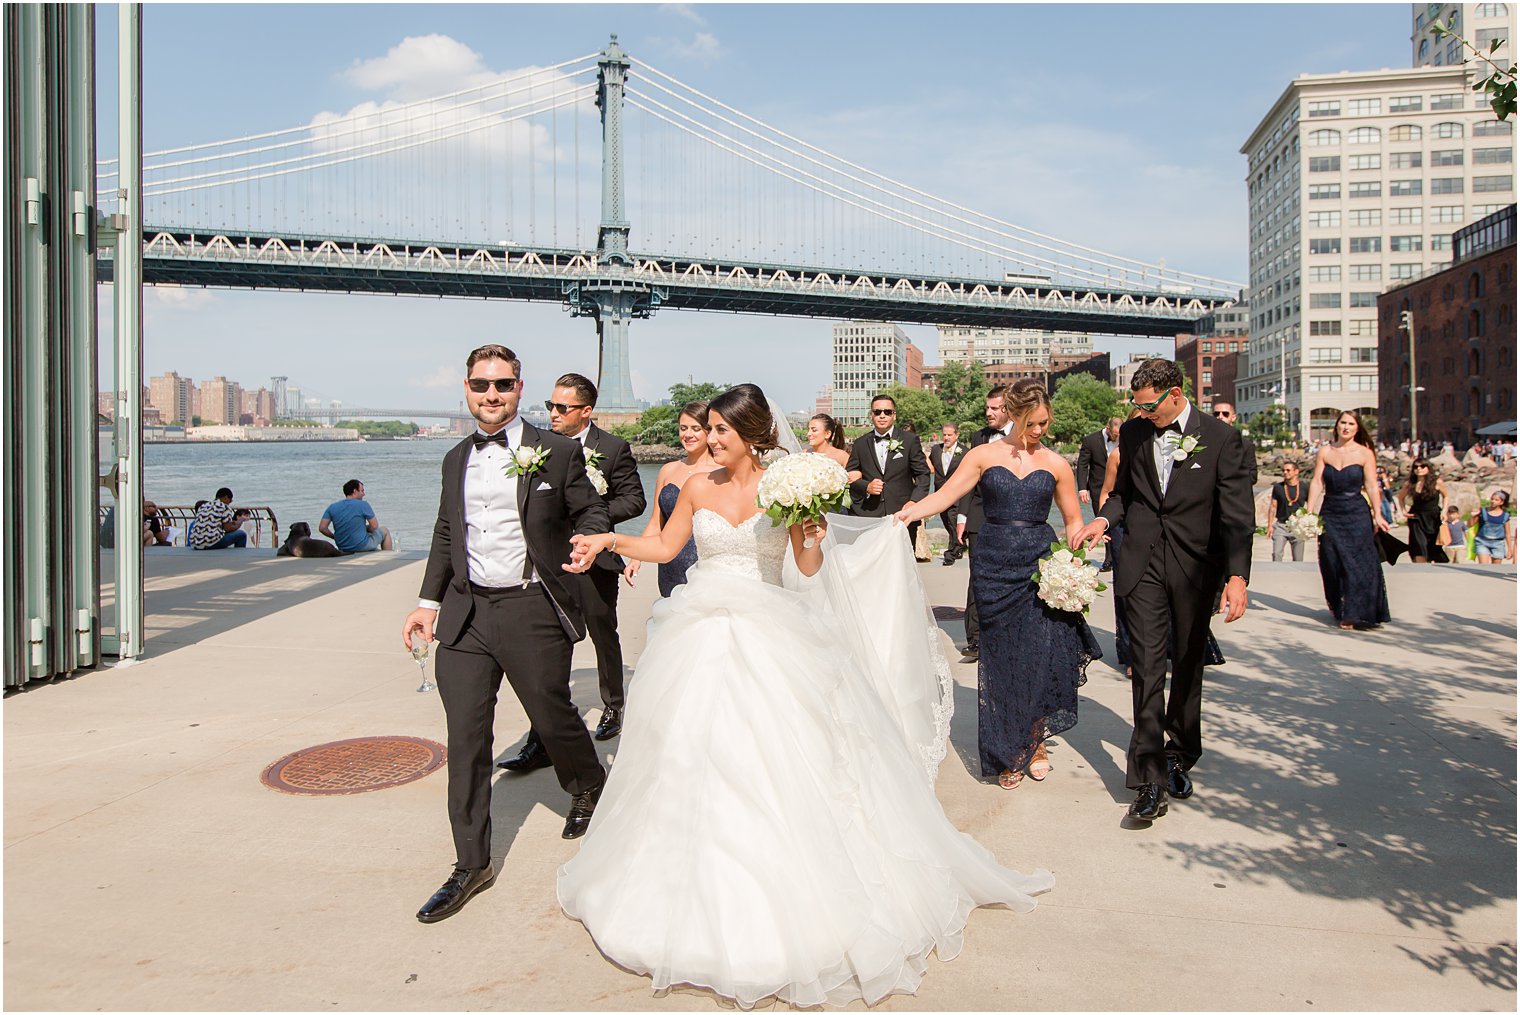 Candid photo of bride and groom walking in Brooklyn